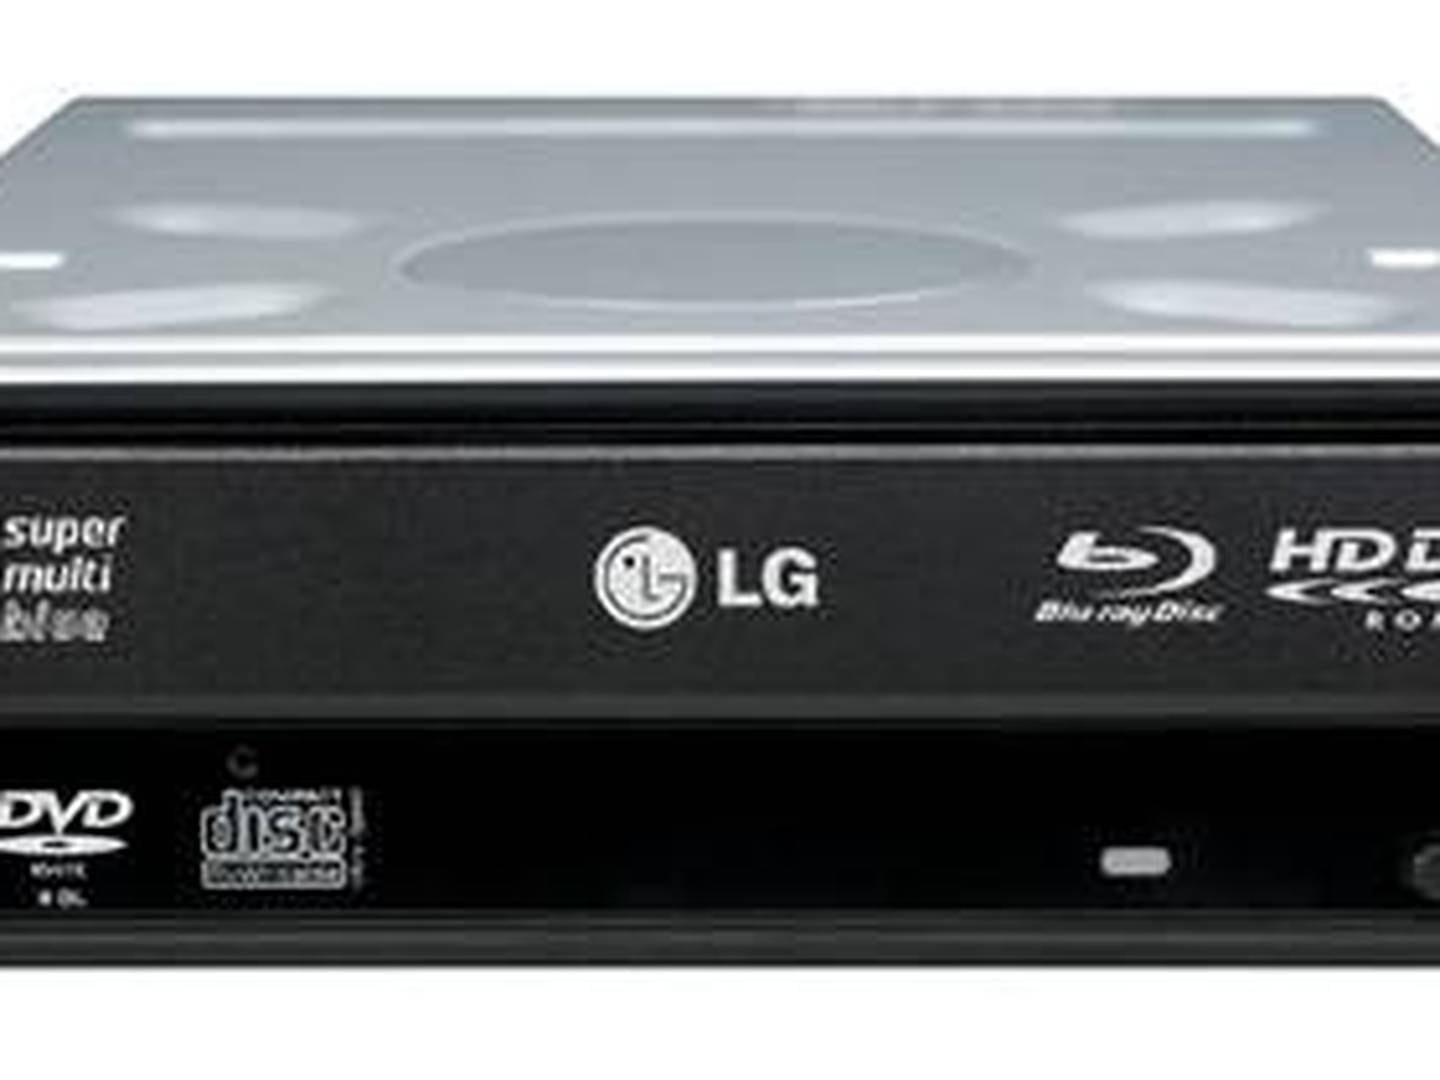 GRABADOR - REPRODUCTOR DVD LG RHT-498 250G TDT